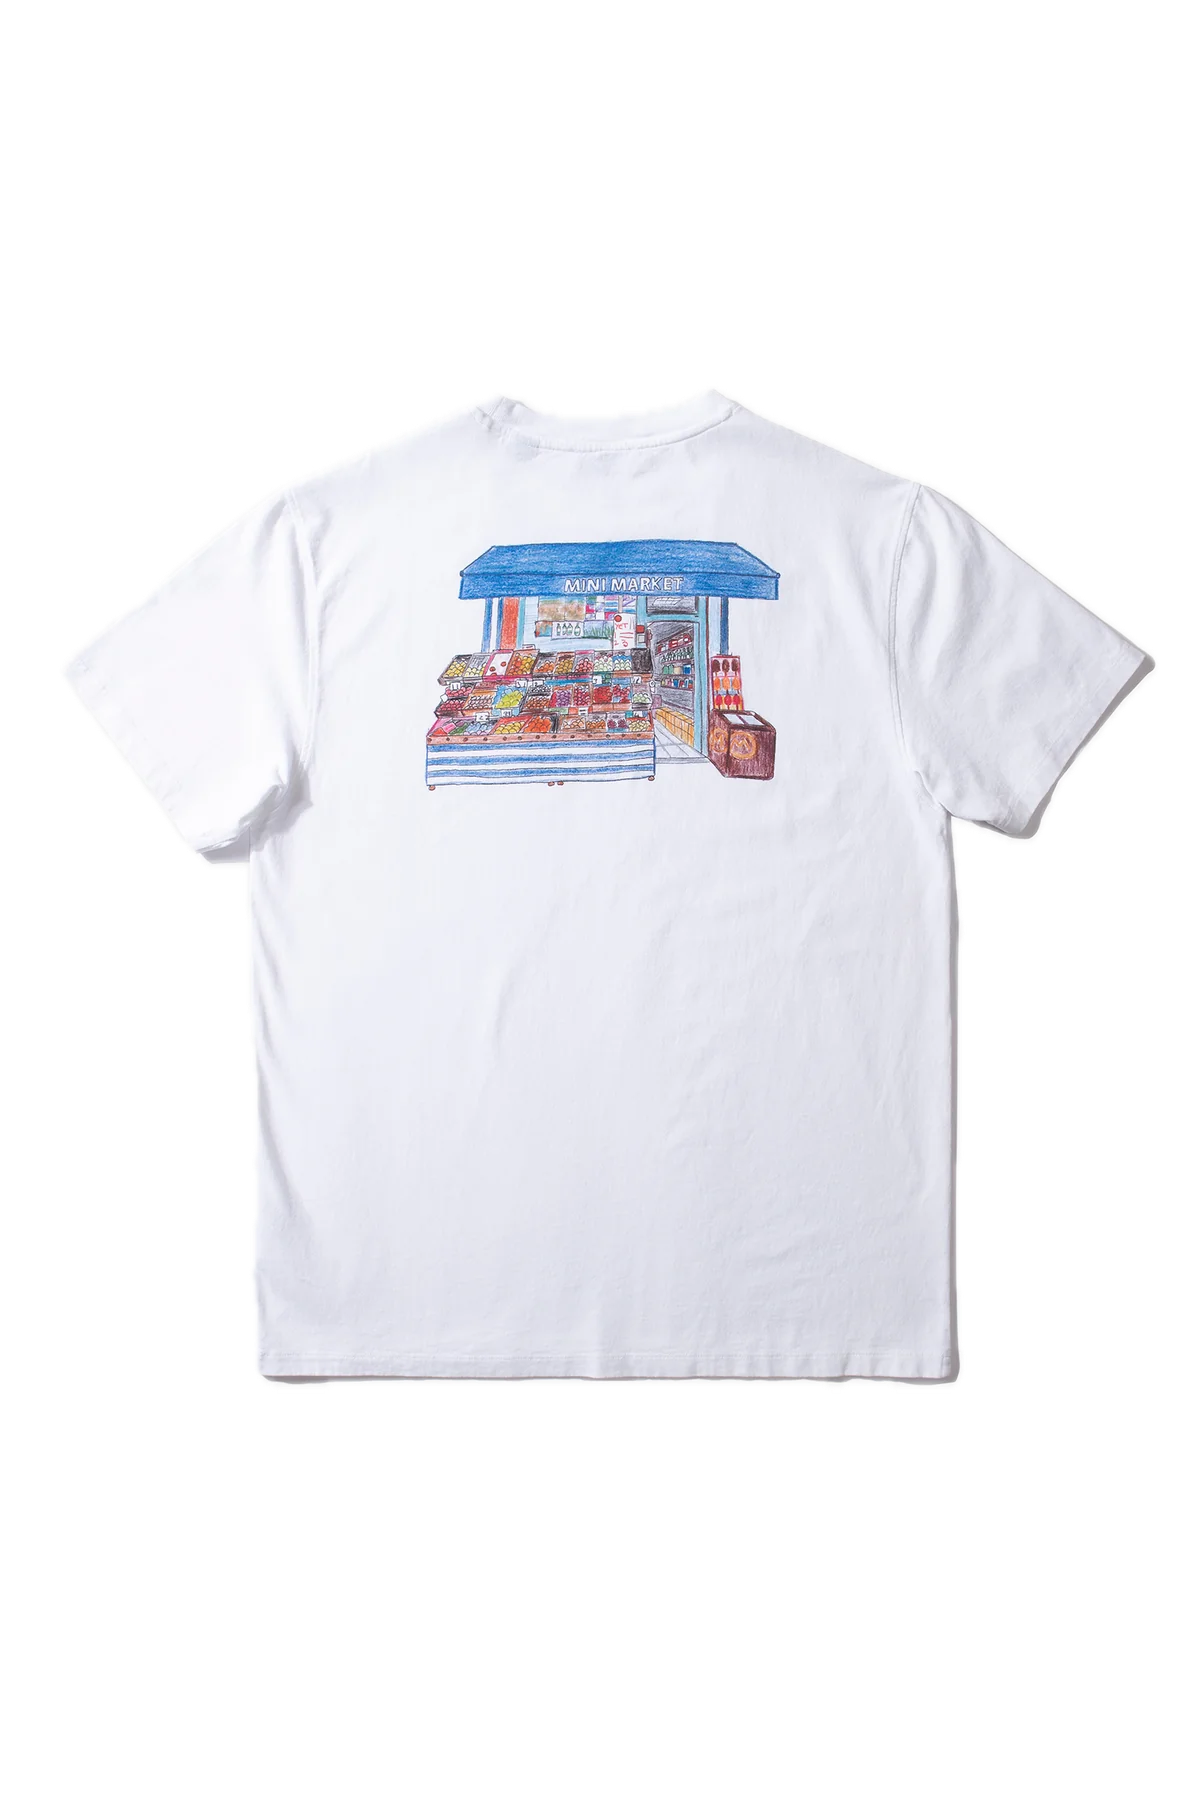 Edmmond Studios Mini Market White T-shirt